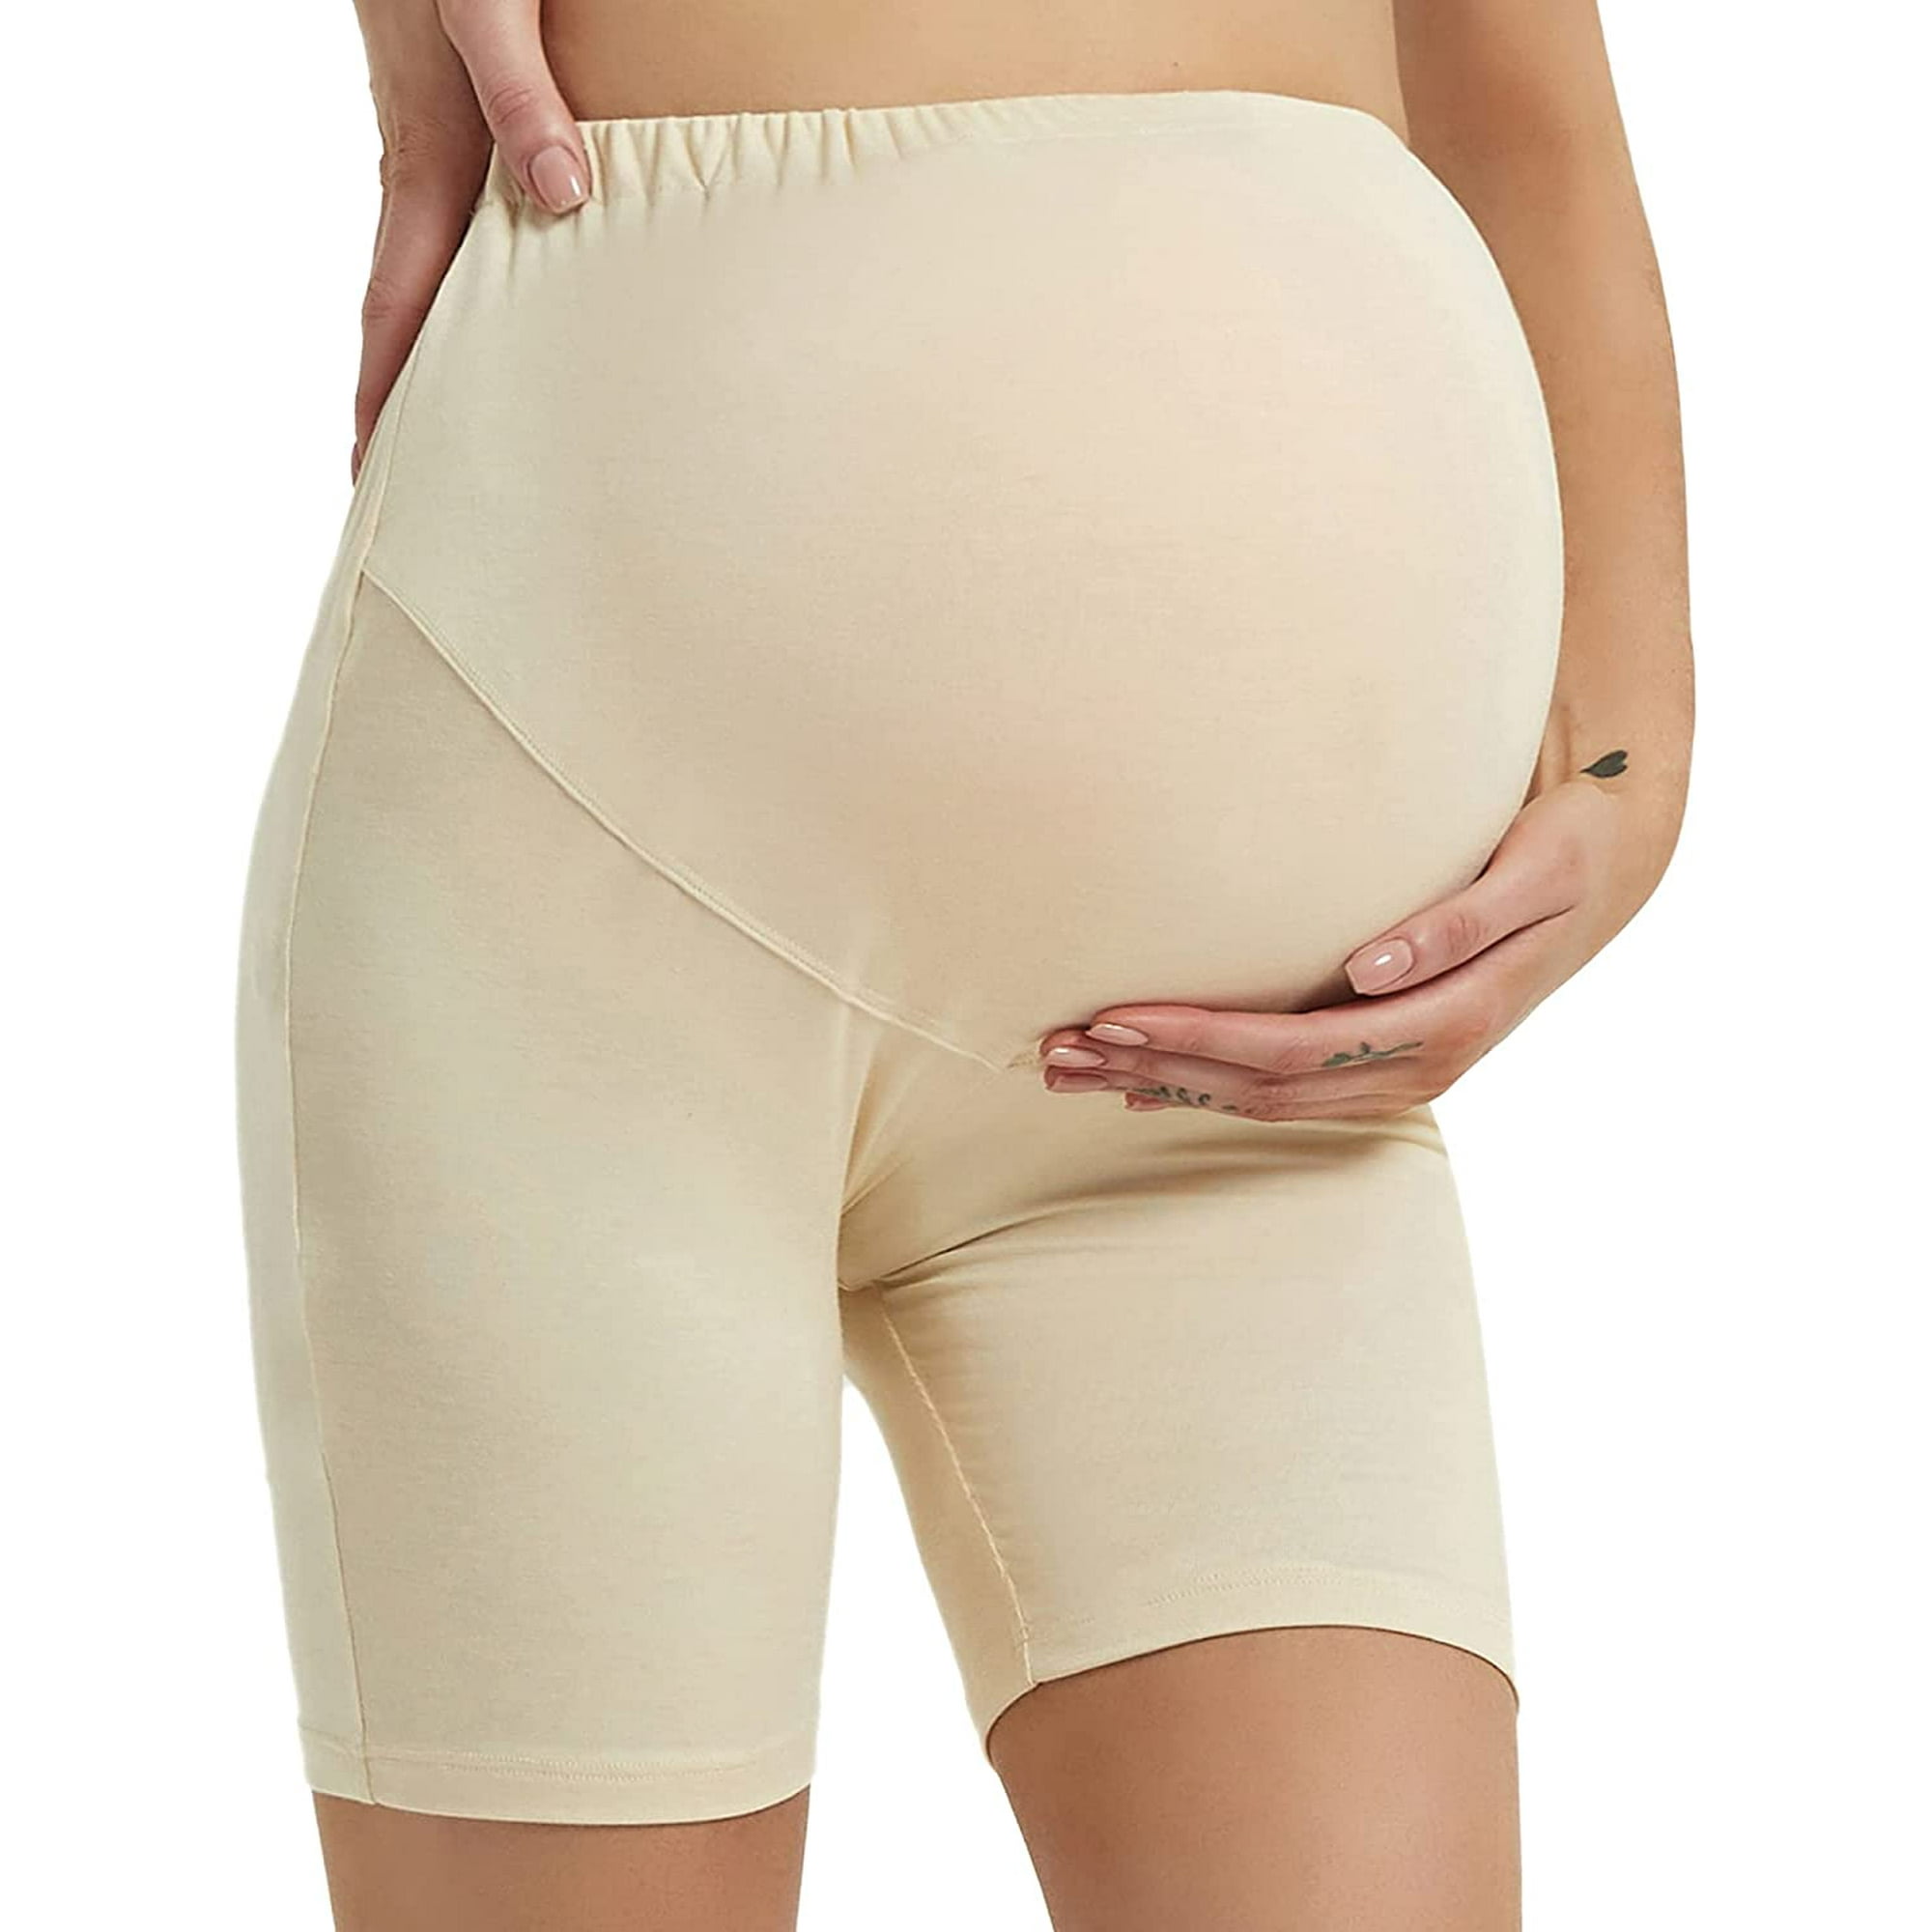 pregnancy shorts under dress Cheap Sale - OFF 63%